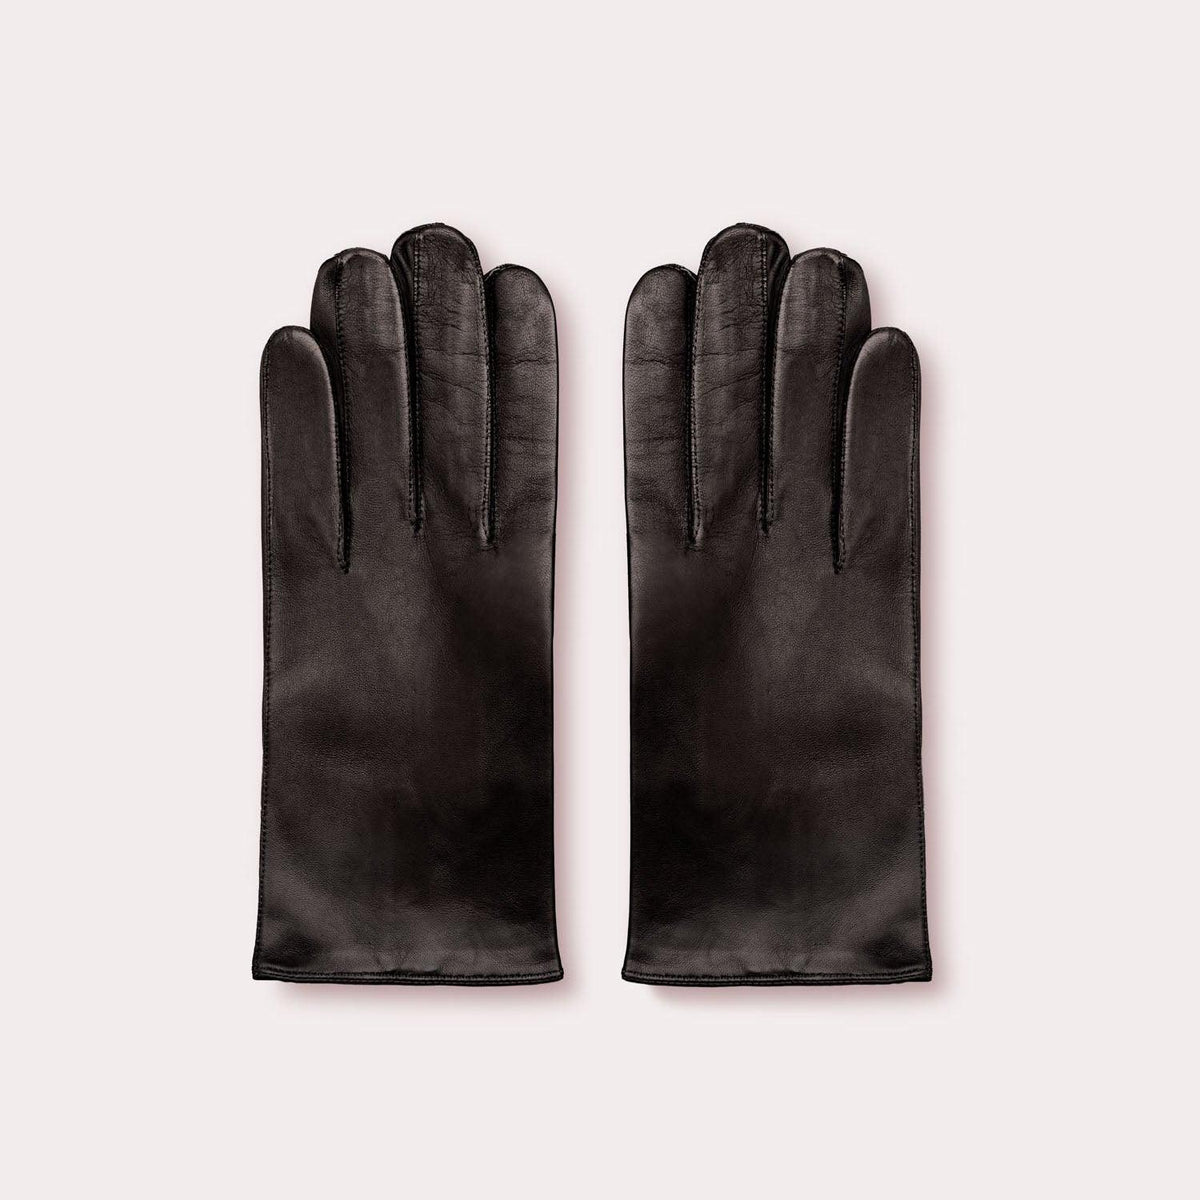 Men's Grant Glove, black leather gloves.